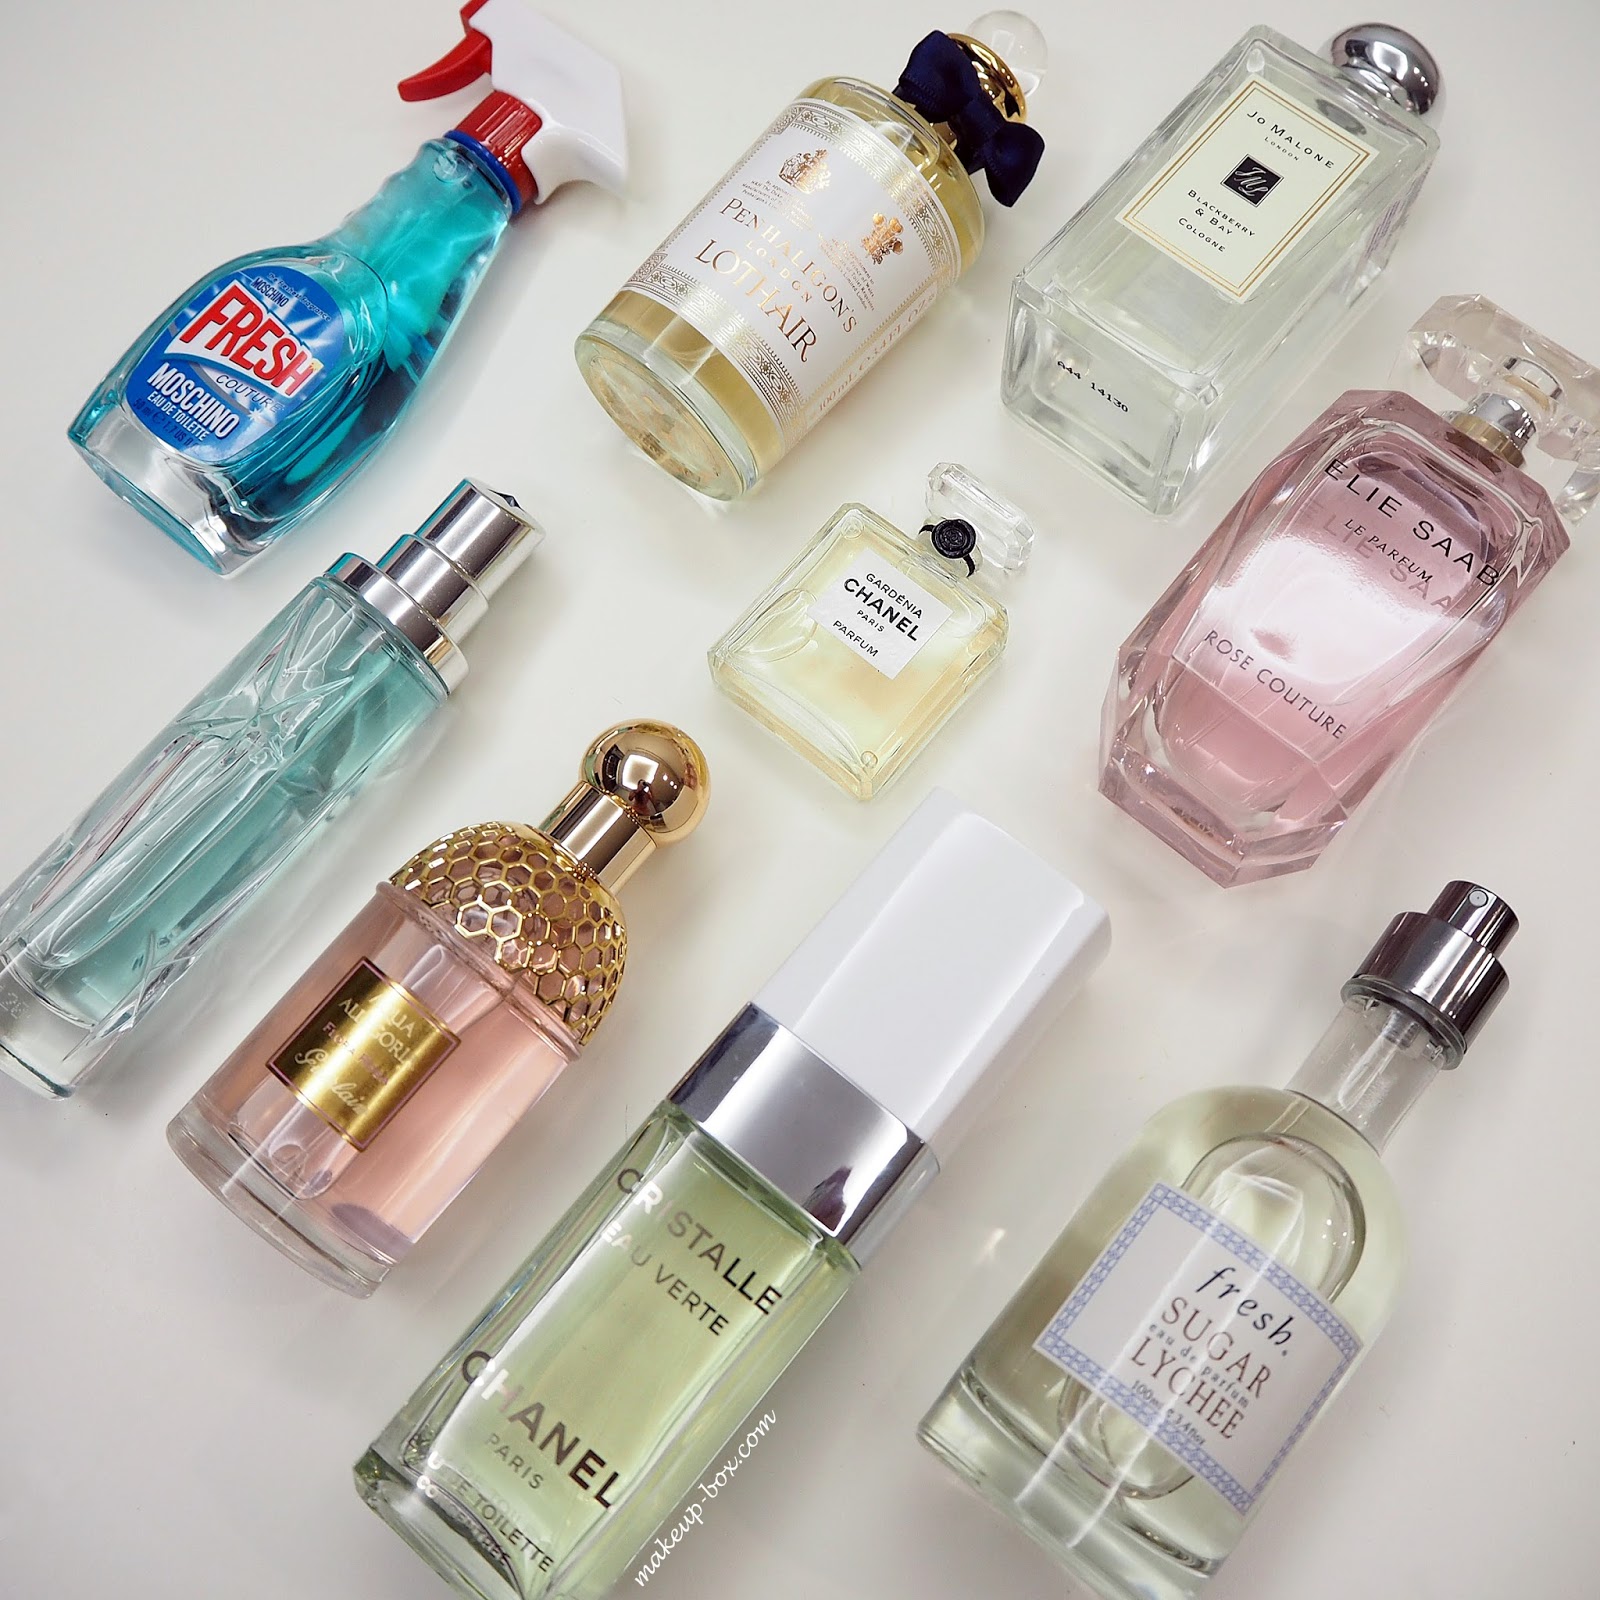 The Makeup Box: Current Favorite Spring Fragrances: Feb 2016